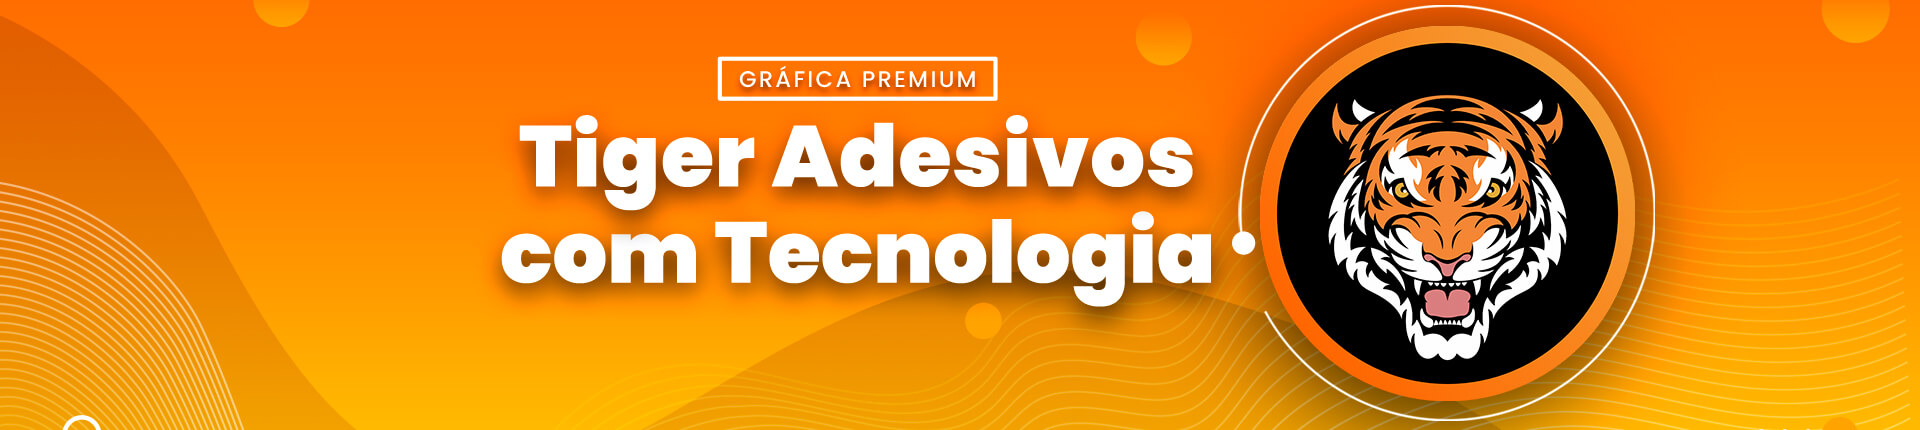 Full Banner Site - Tiger Adesivos com Tecnologia - Empresa